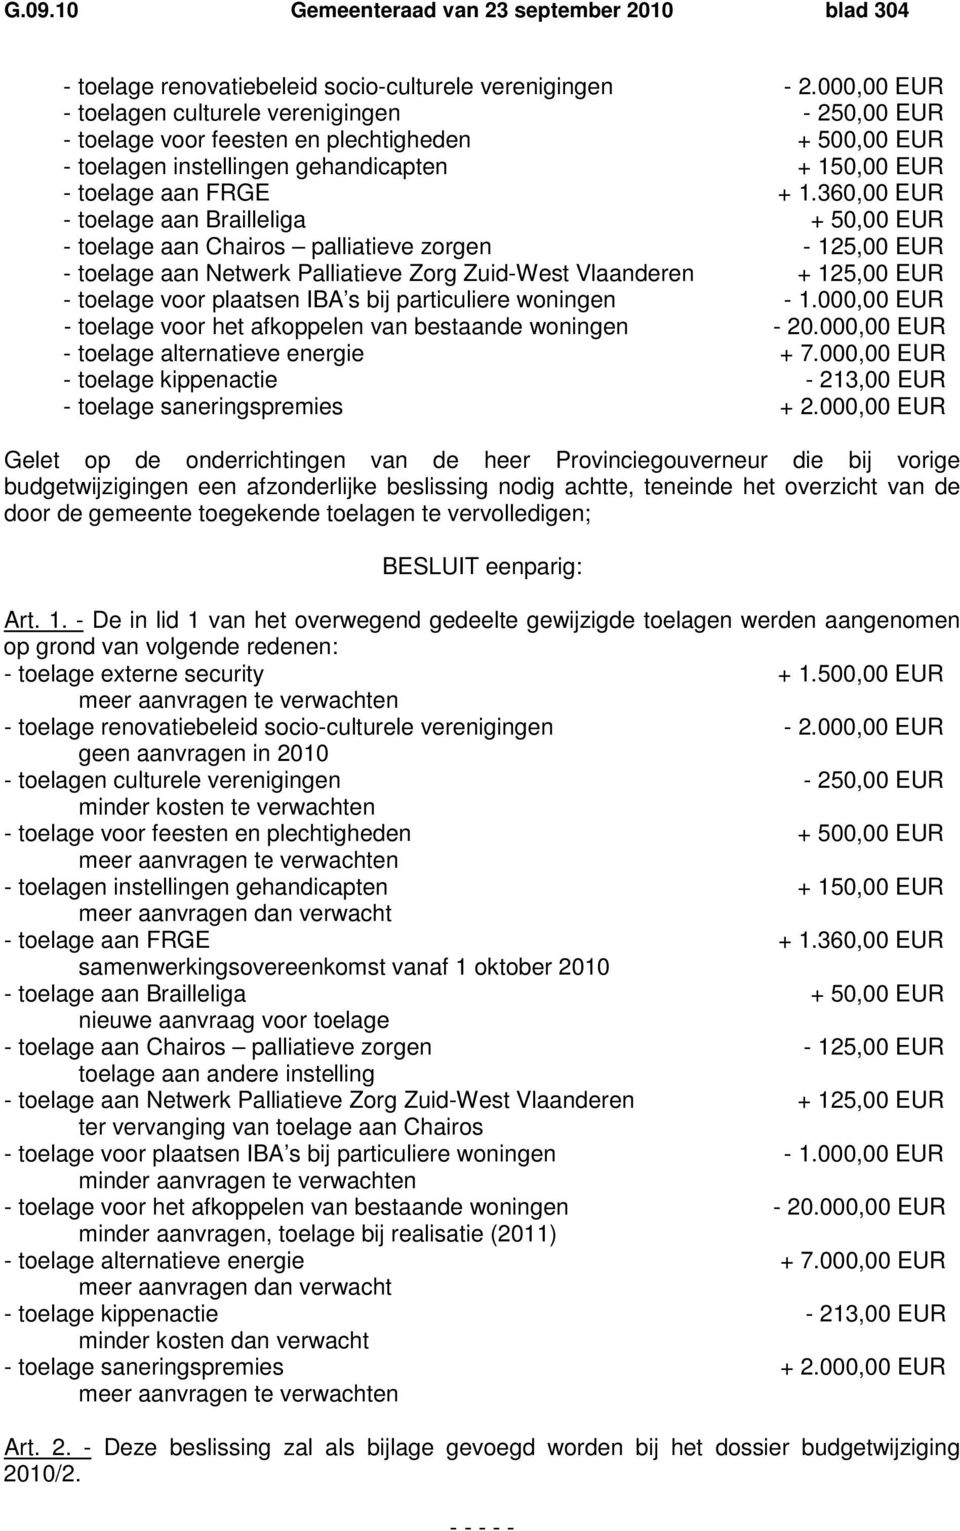 360,00 EUR - toelage aan Brailleliga + 50,00 EUR - toelage aan Chairos palliatieve zorgen - 125,00 EUR - toelage aan Netwerk Palliatieve Zorg Zuid-West Vlaanderen + 125,00 EUR - toelage voor plaatsen